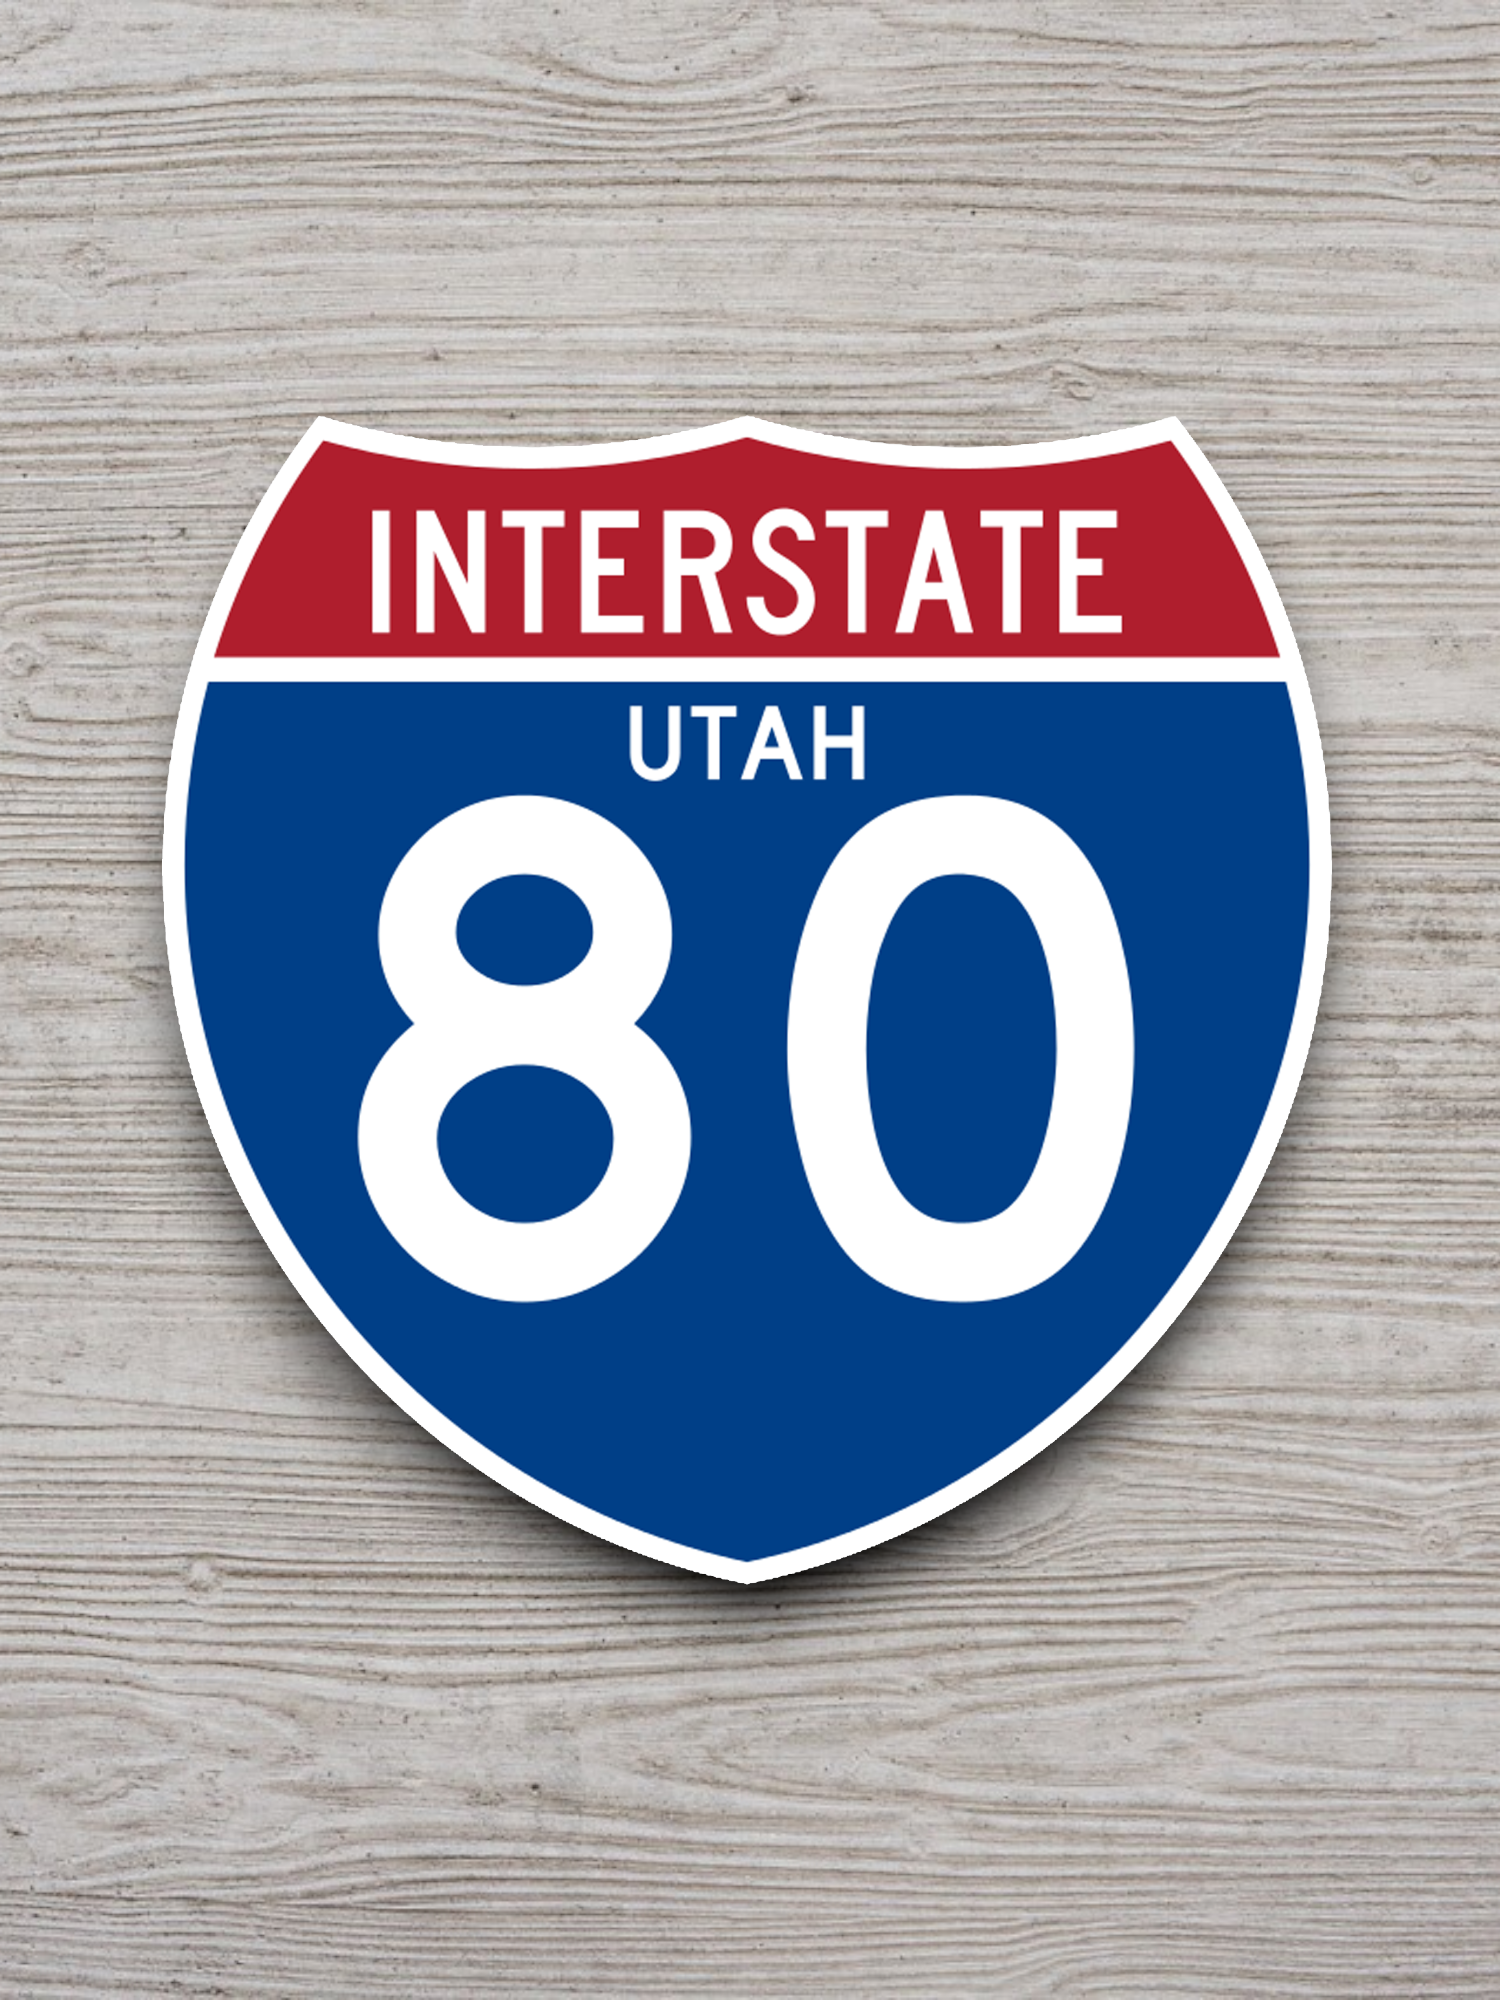 Interstate I-80 Utah - Road Sign Sticker